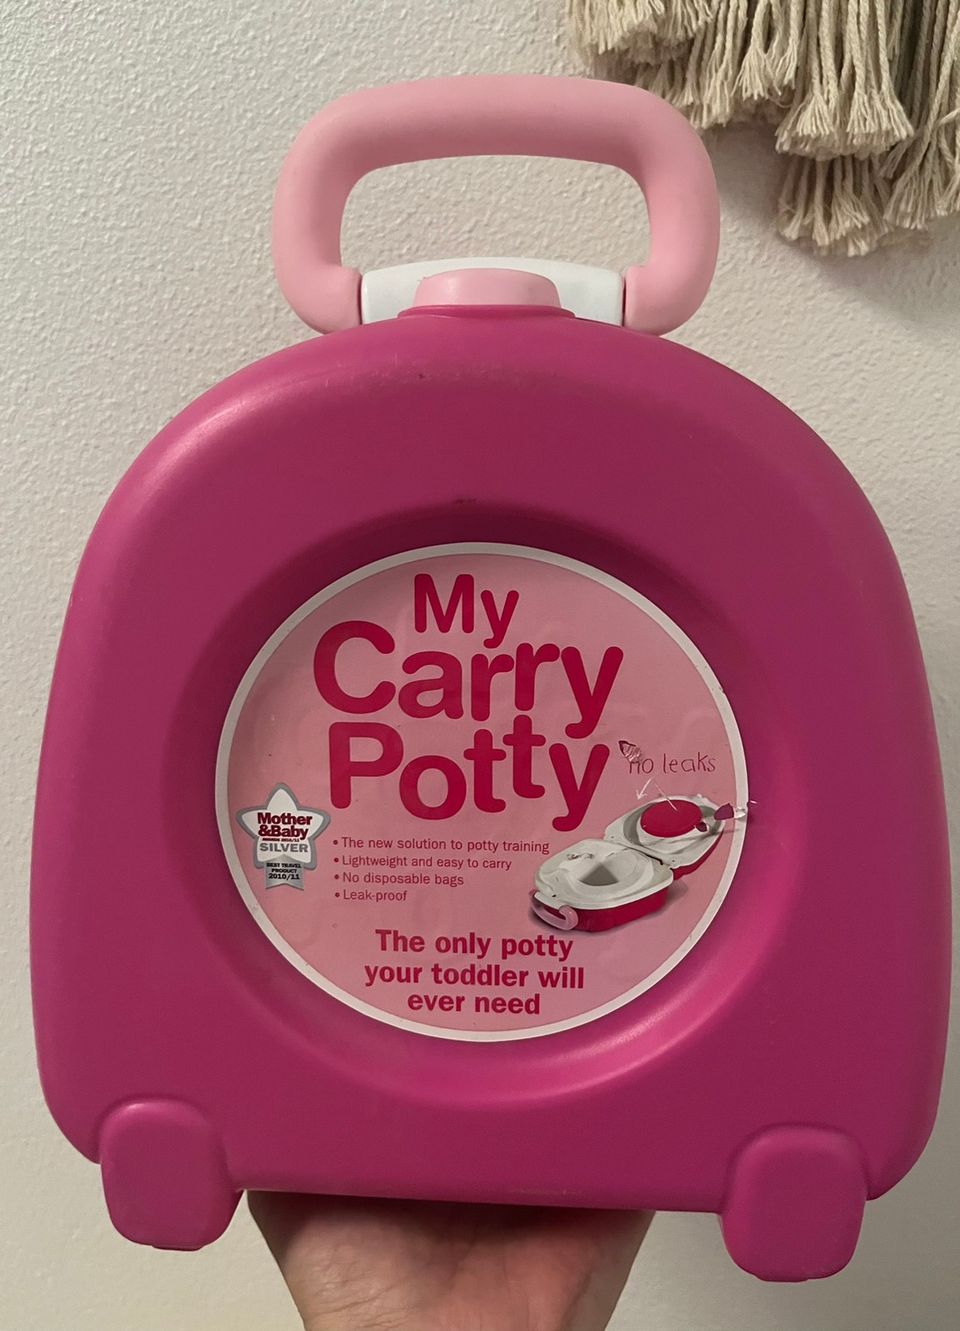 Kannettava My Carry Potty - potta